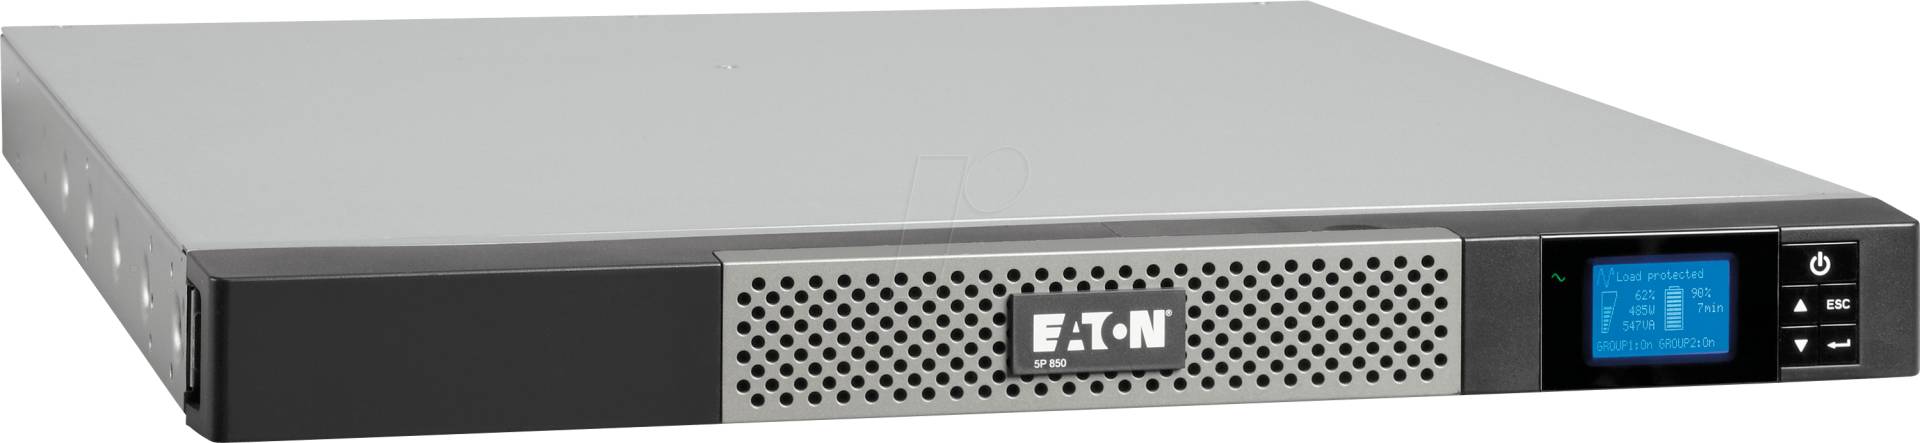 EATON 5P1150IR - USV, 1150 VA / 770 W, USB-Port, RS232-Port von Eaton